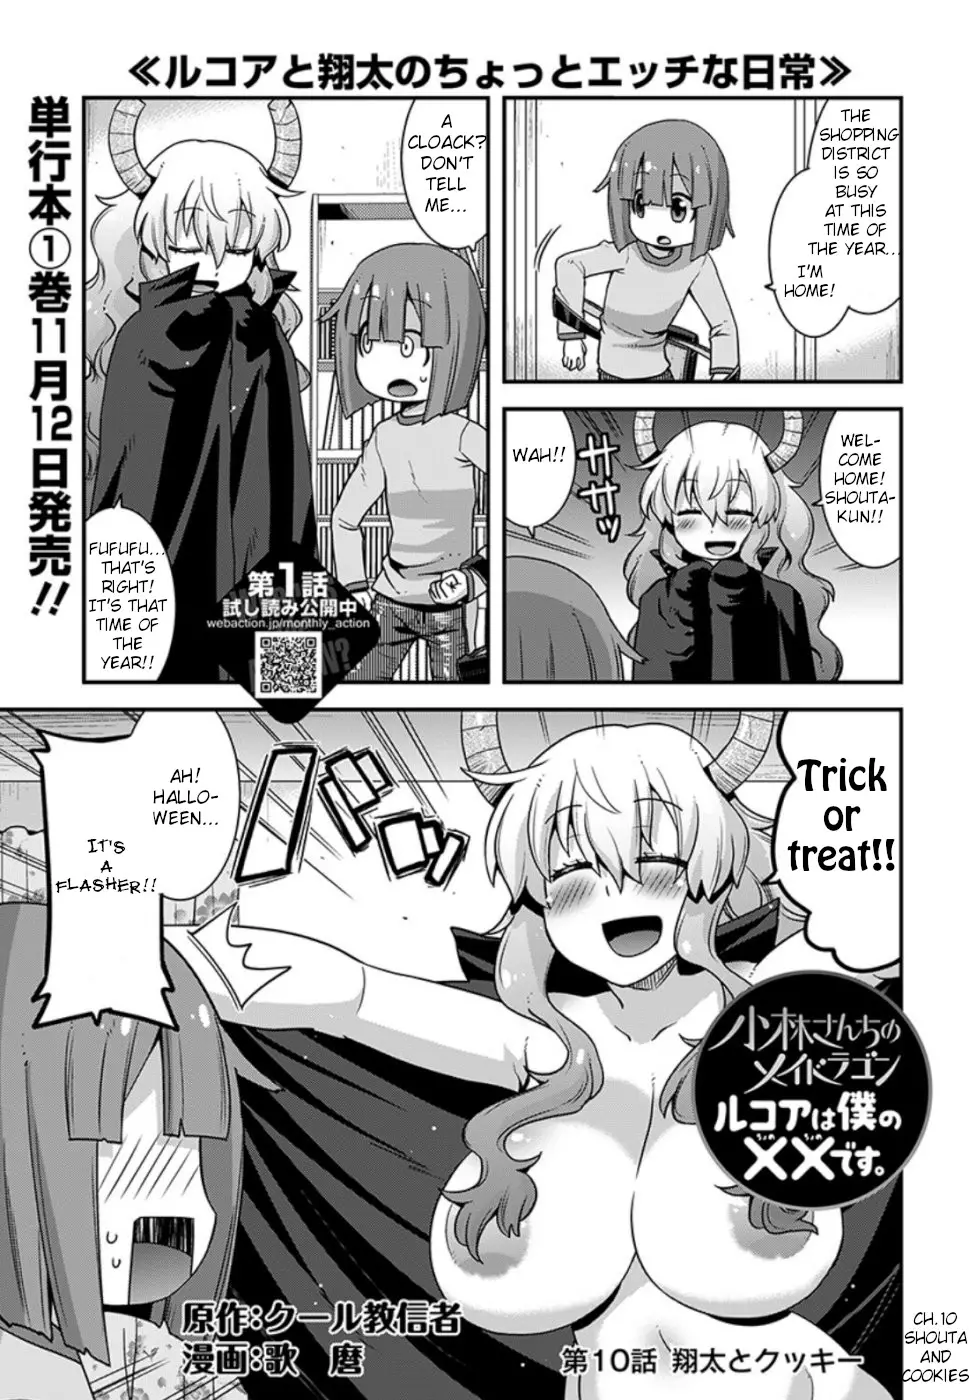 Miss Kobayashi's Dragon Maid: Lucoa Is My Xx - 10 page 1